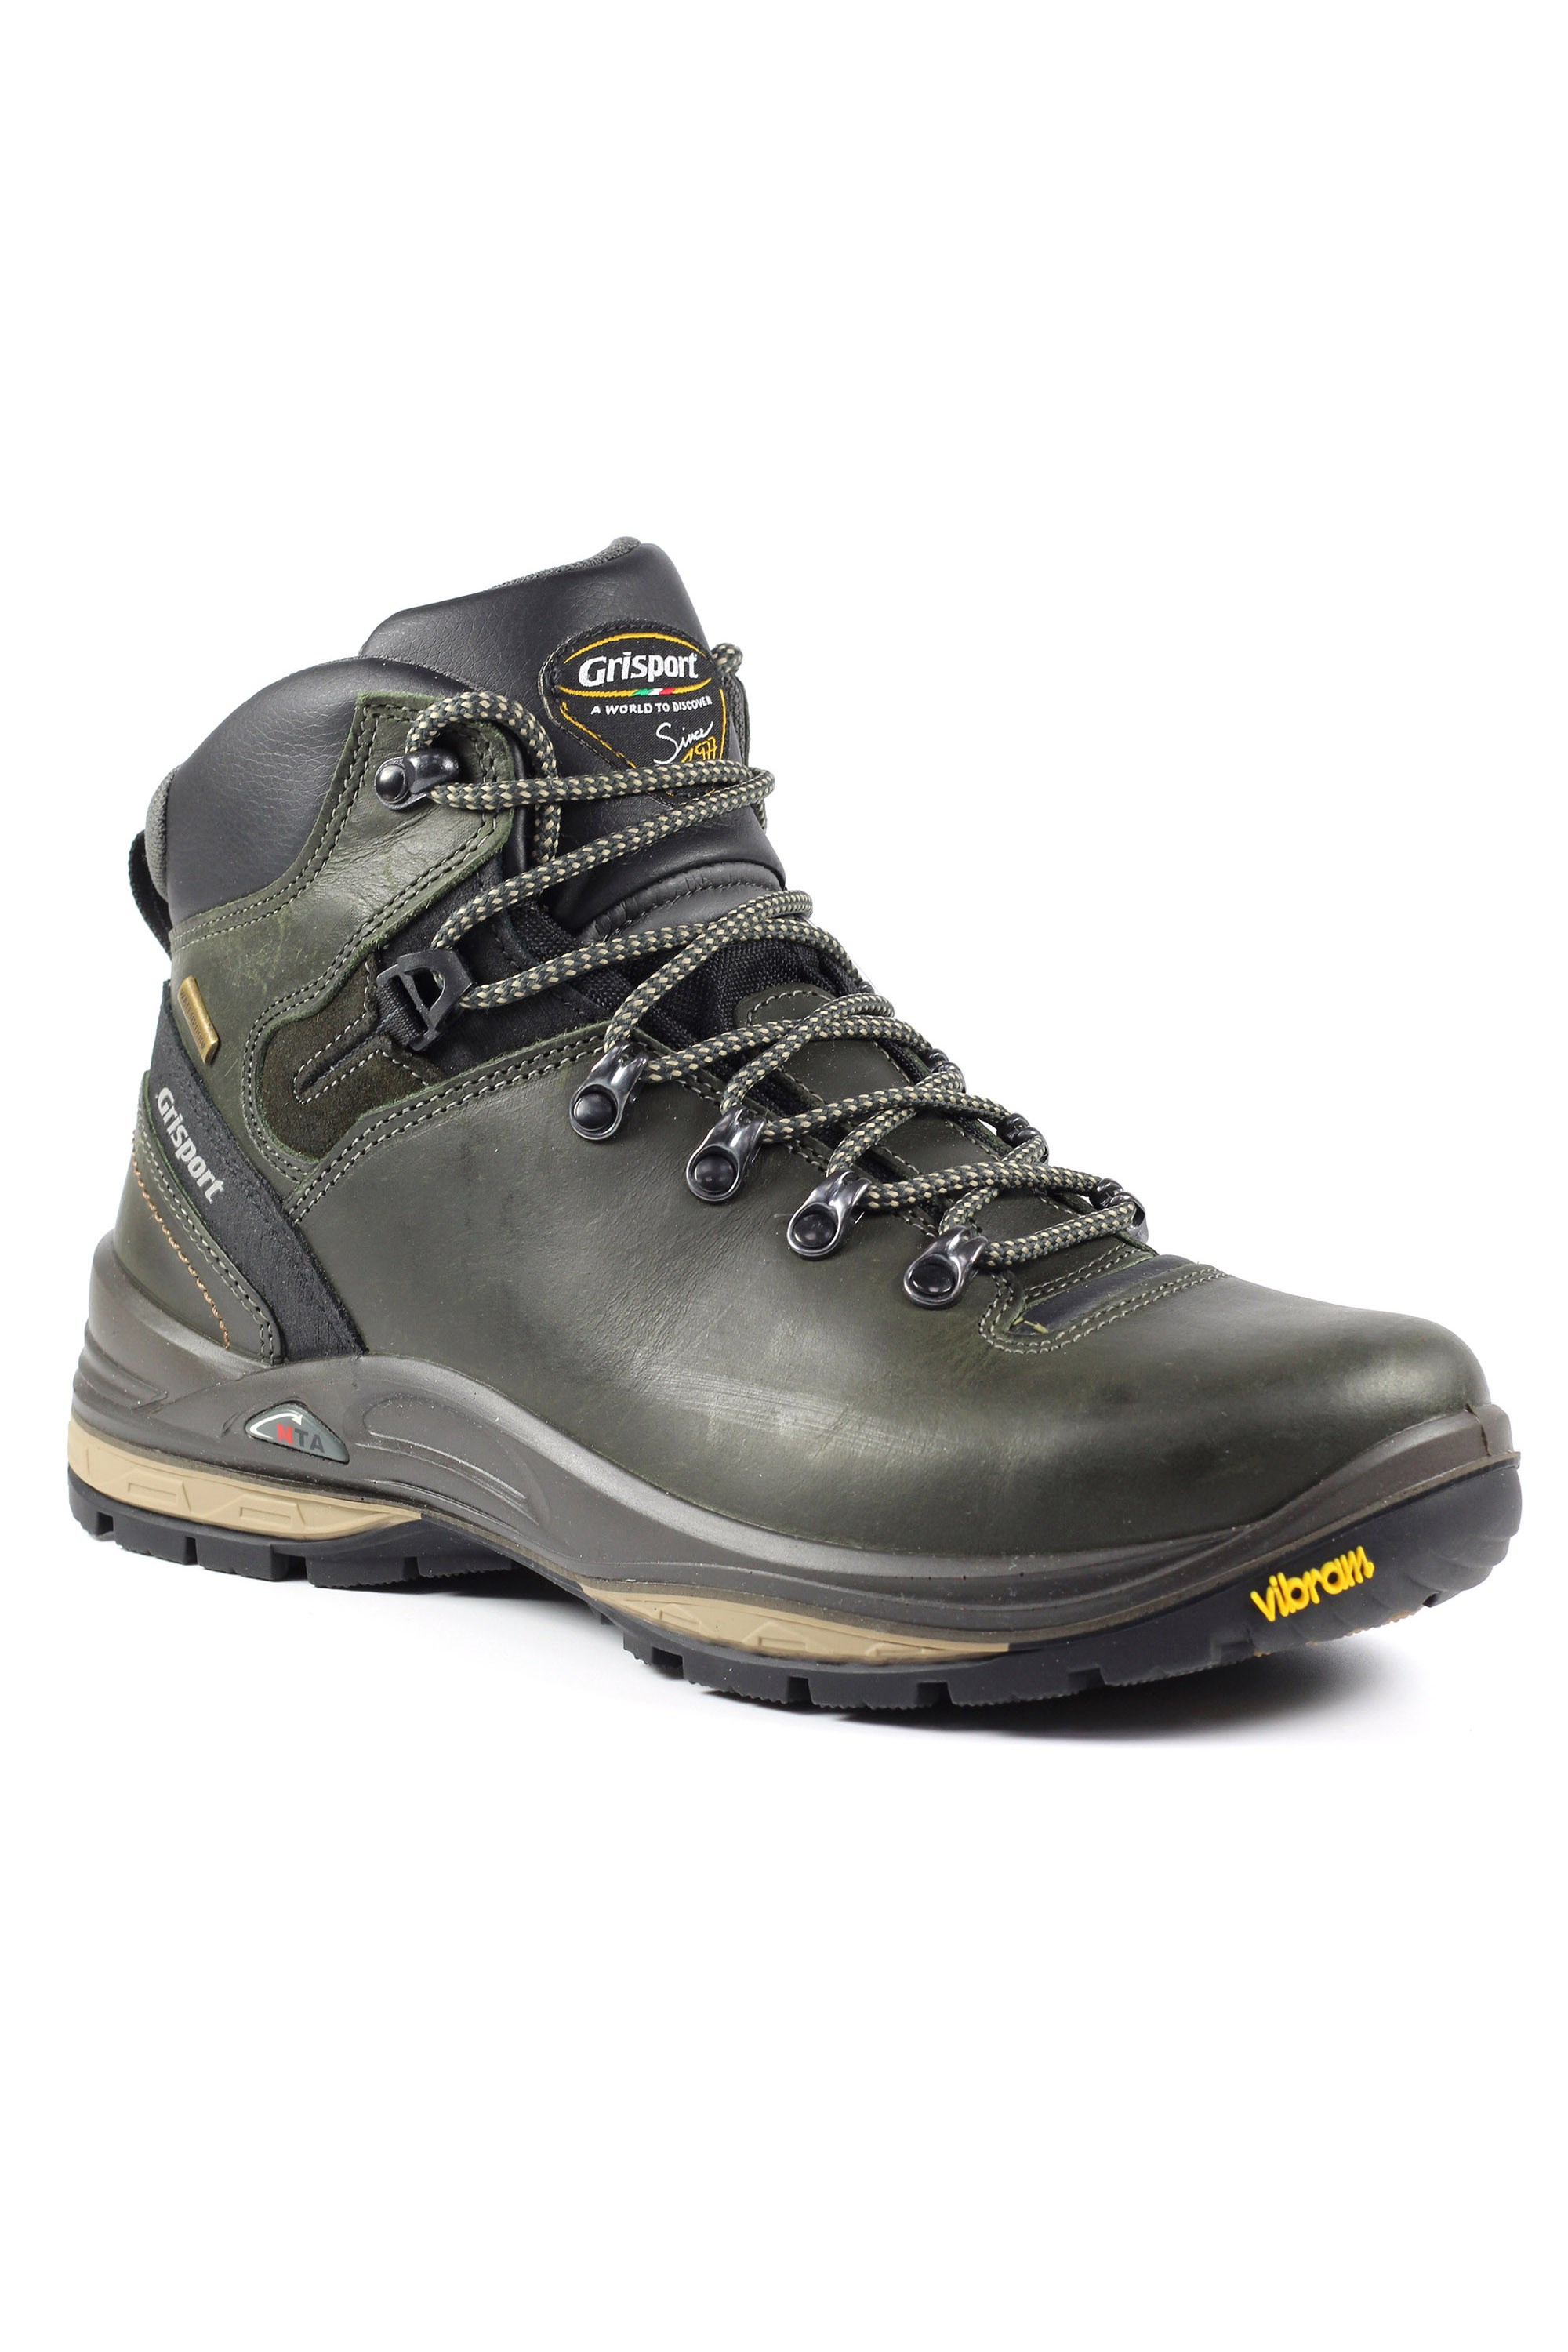 Saracen Mens Waterproof Hiking Boots -